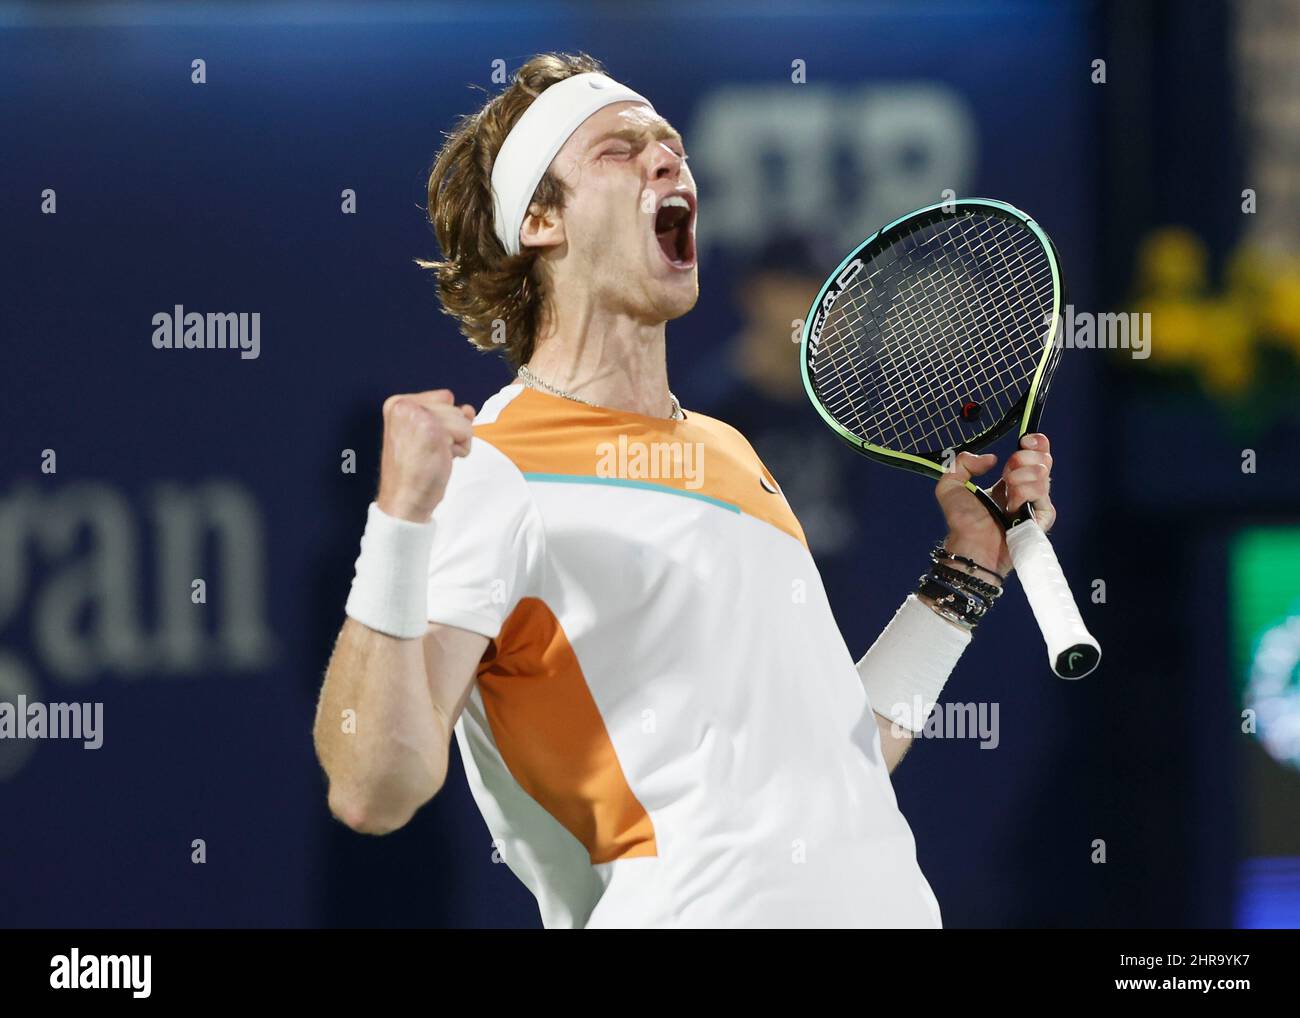 Dubai Tennis Champs (@DDFTennis) / X